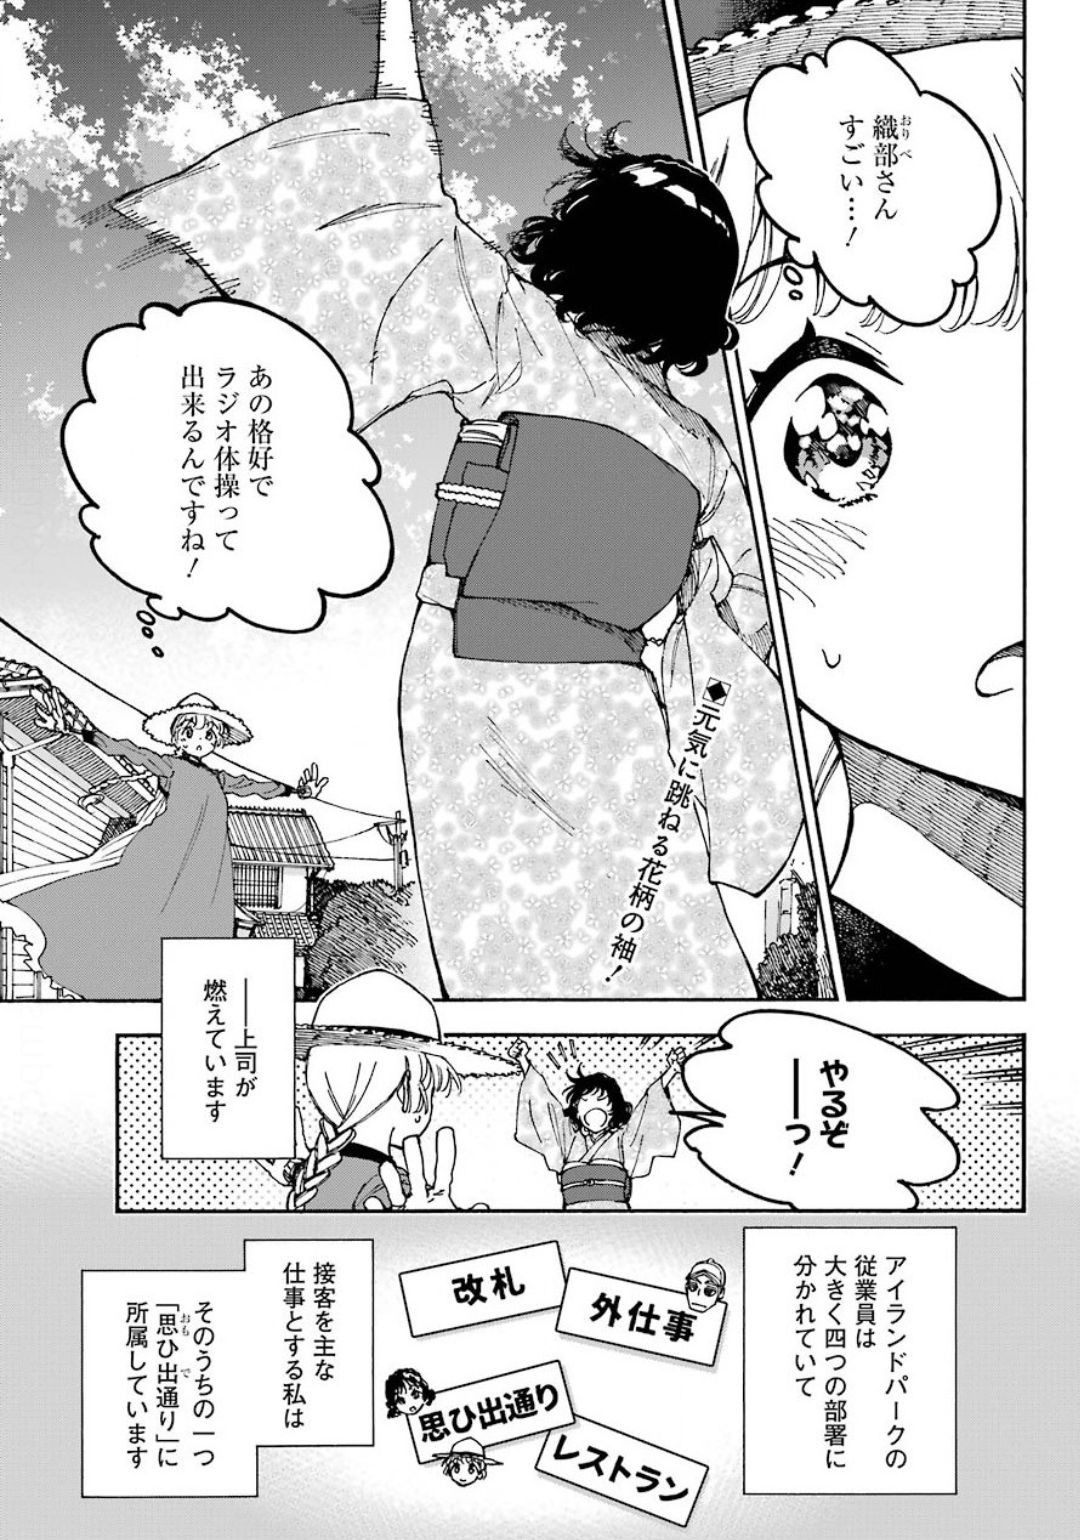 Hotomeku-kakashi - Chapter 05 - Page 3